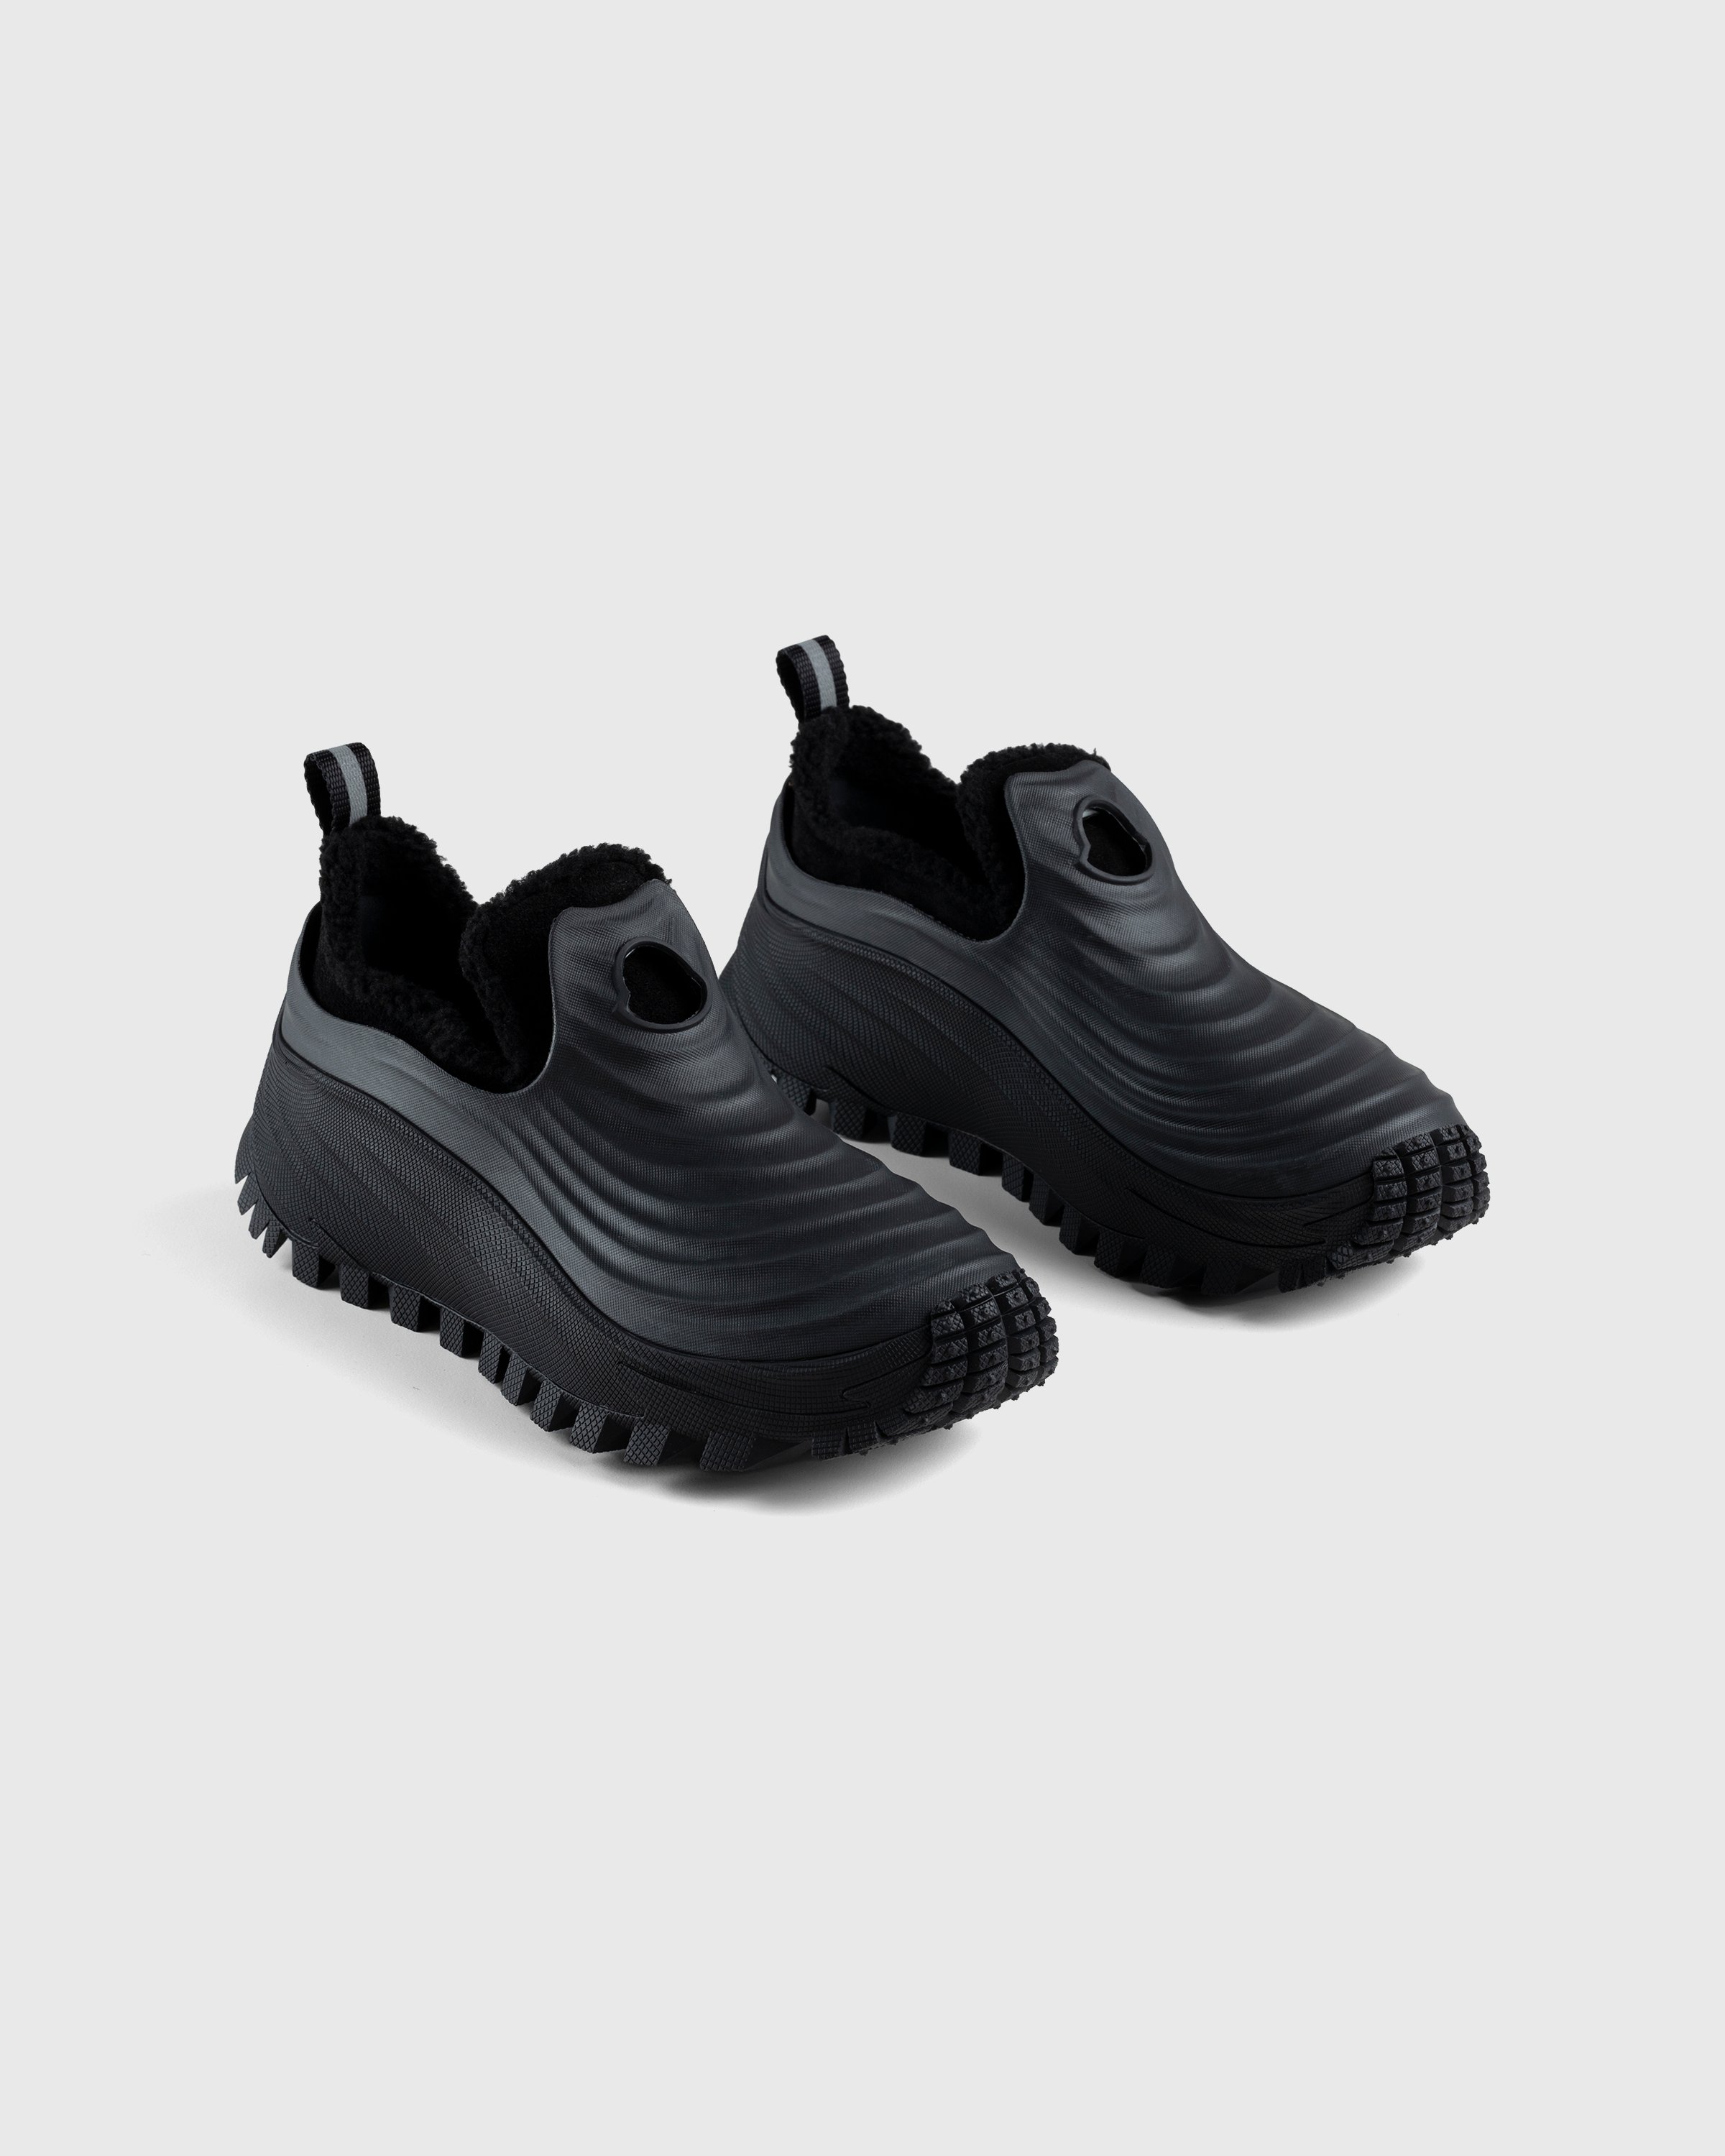 Moncler - Aqua Rain Boots Black - Footwear - Brown - Image 3